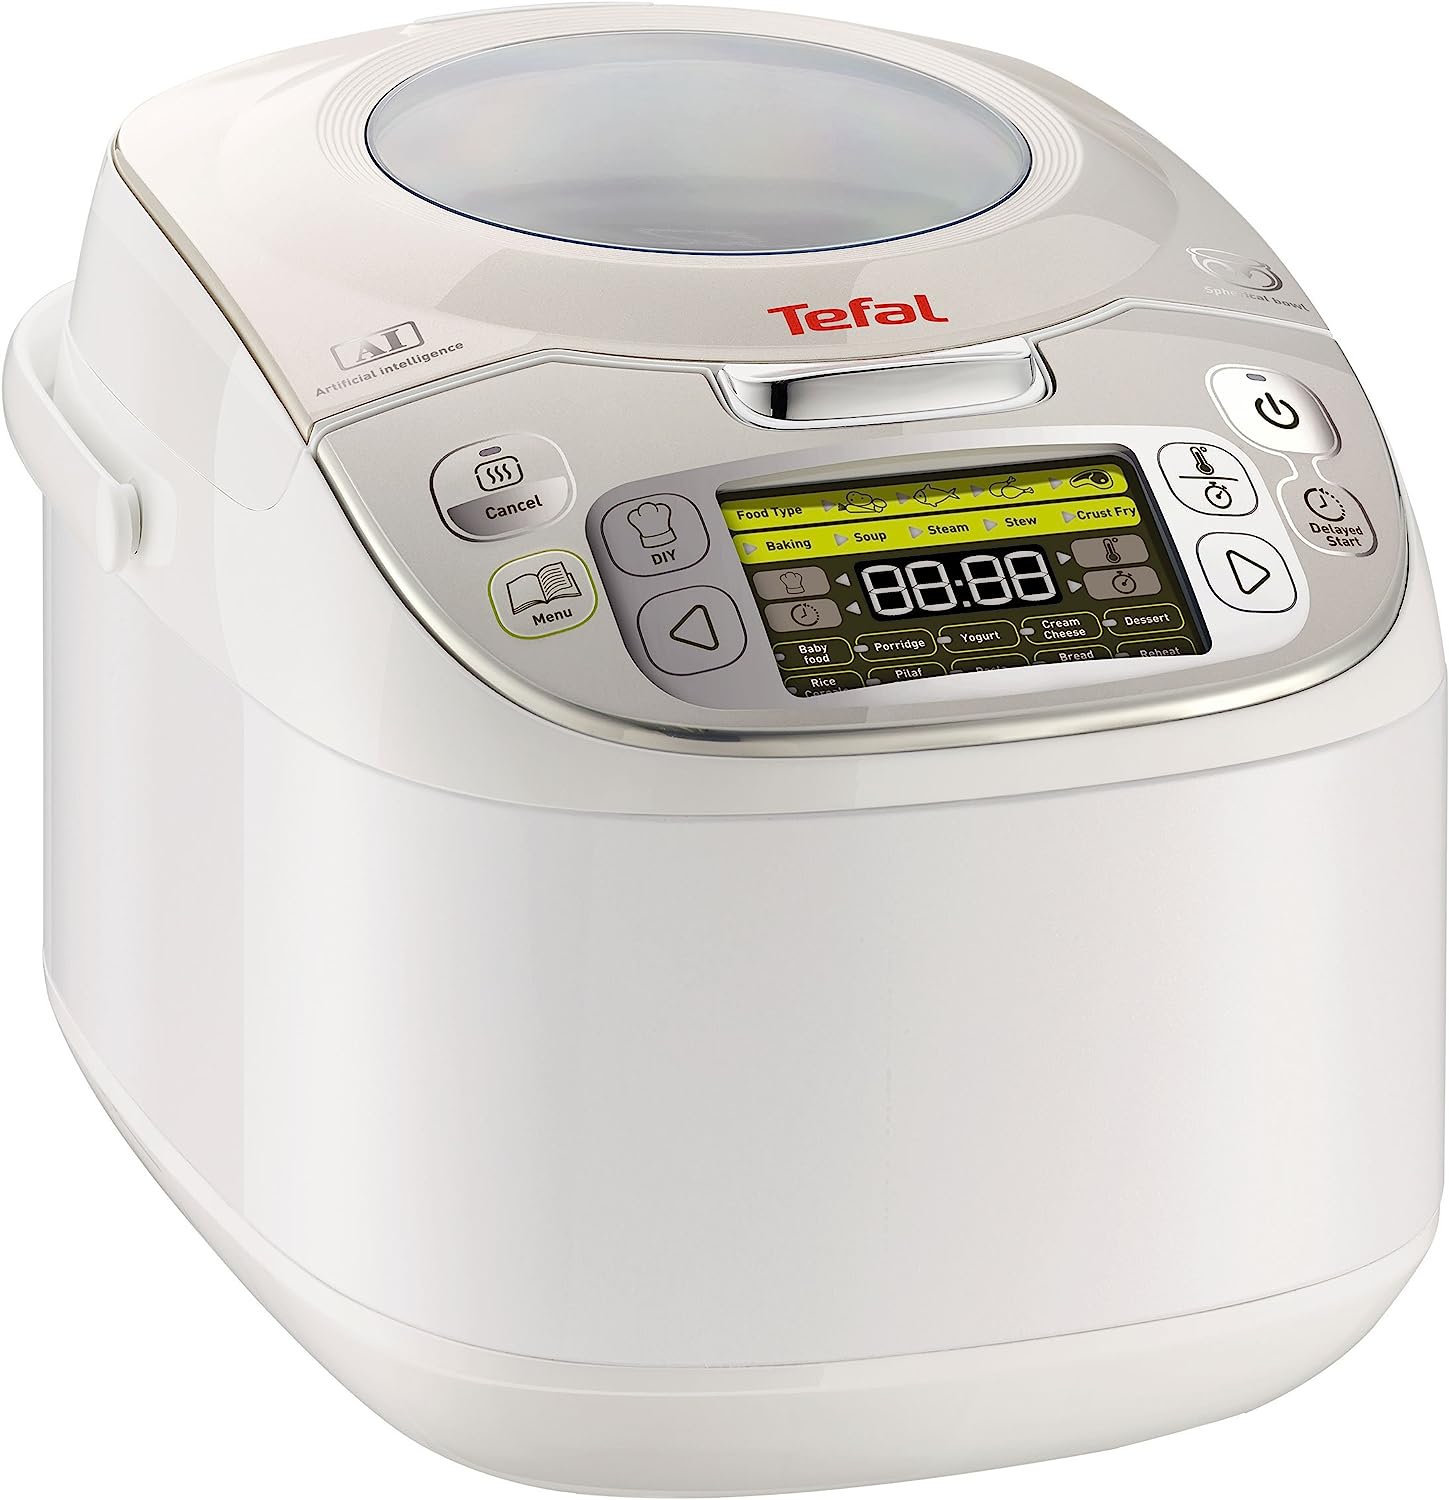 مولتی کوکر تفال مدل Tefal RK8121 multi cooker - ارسال الی 20 الی 25 روز کاری